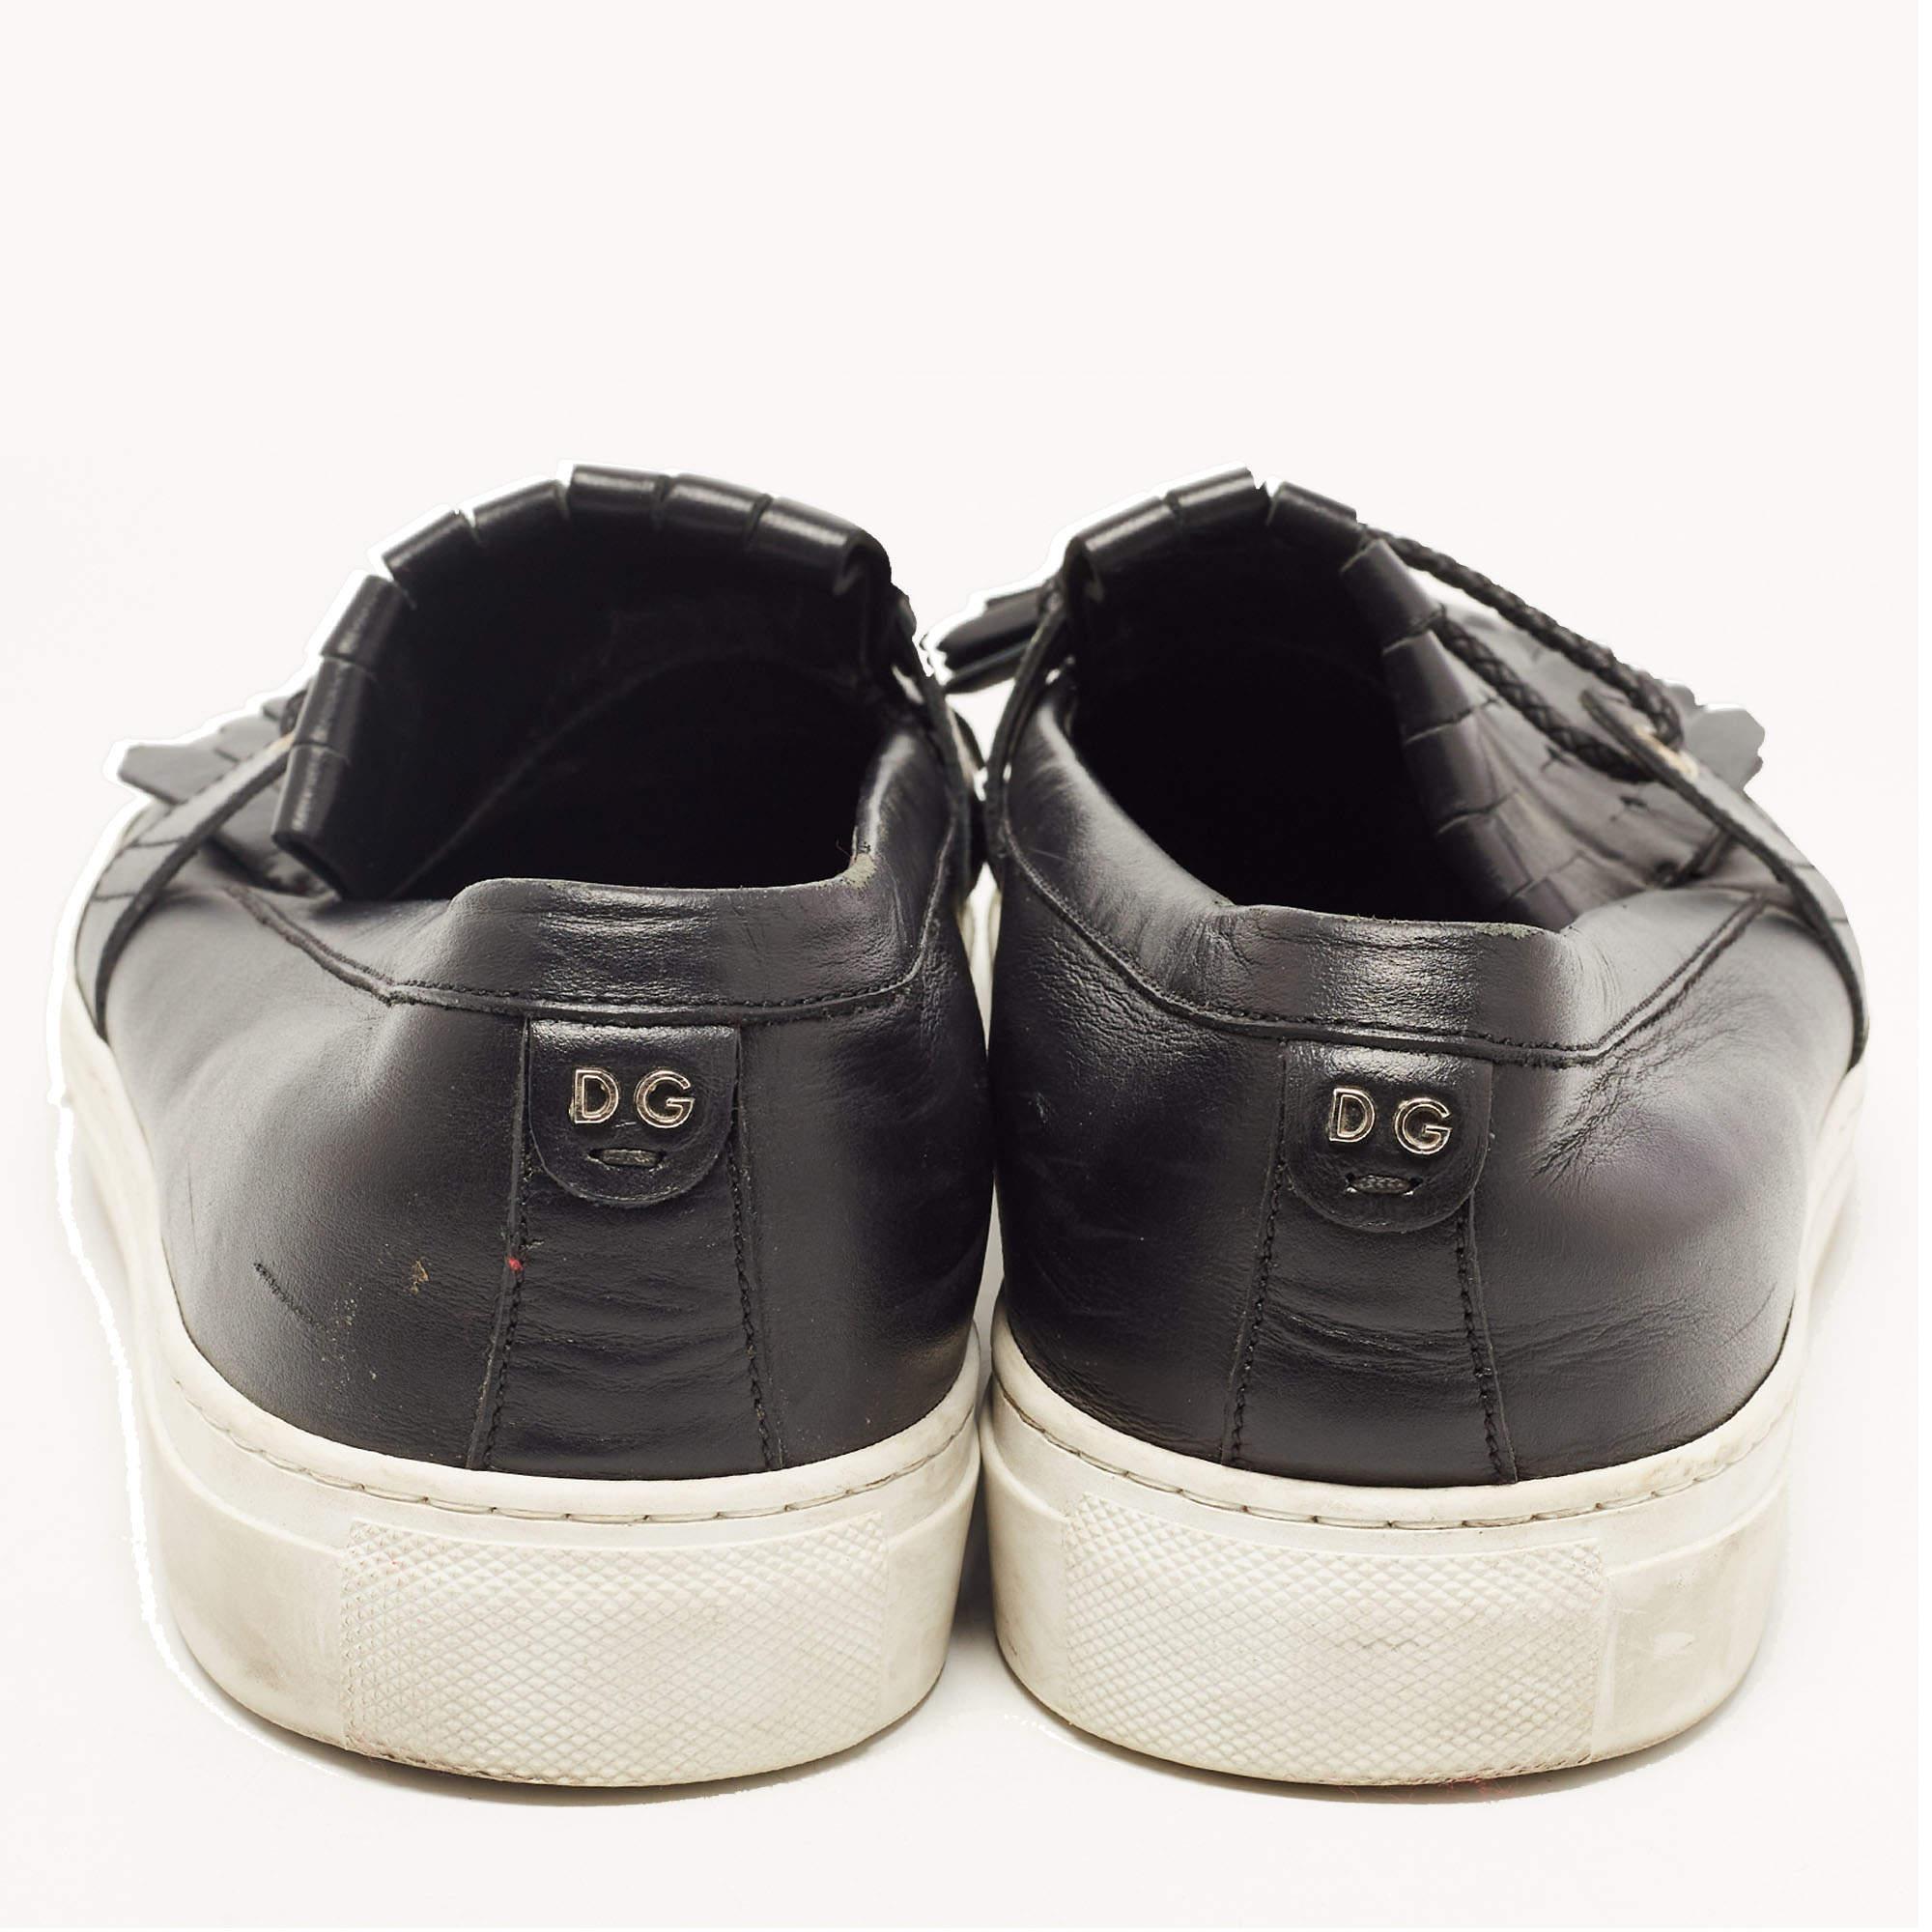 Dolce & Gabbana Black Leather Fringe Slip On Sneakers Size 41.5 For Sale 3